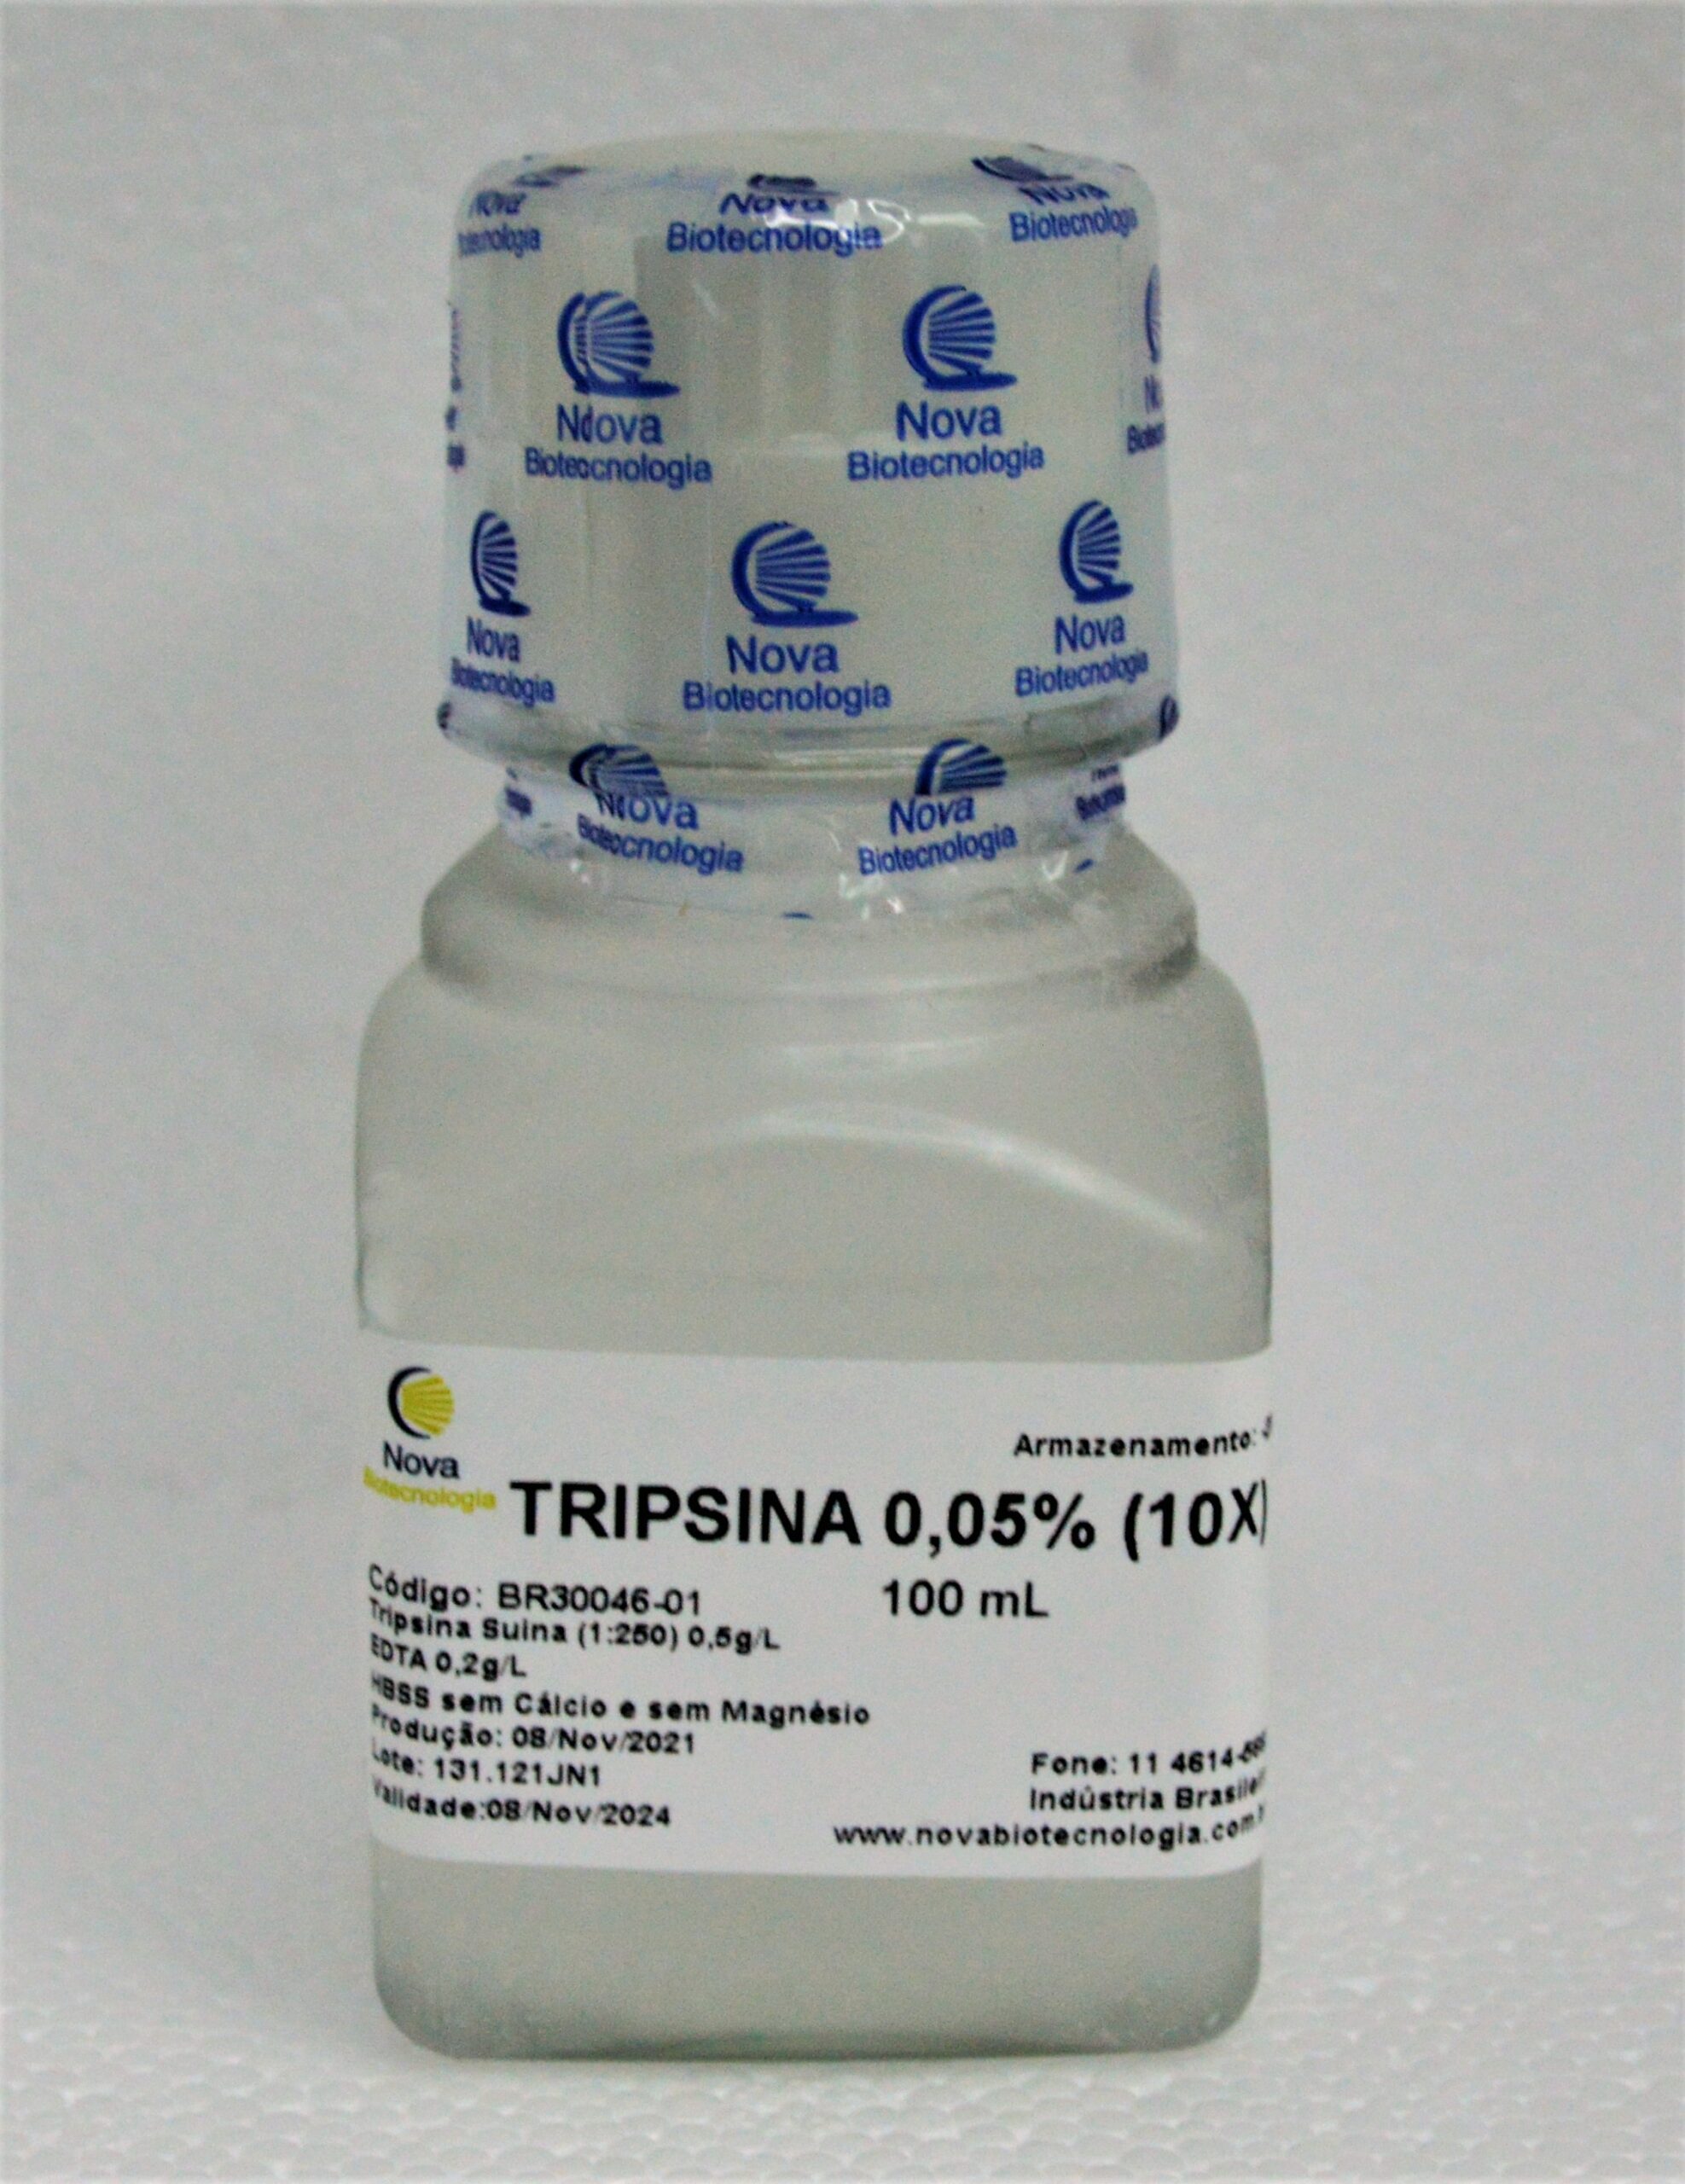 Tripsina 0,25% - 100mL - 10X